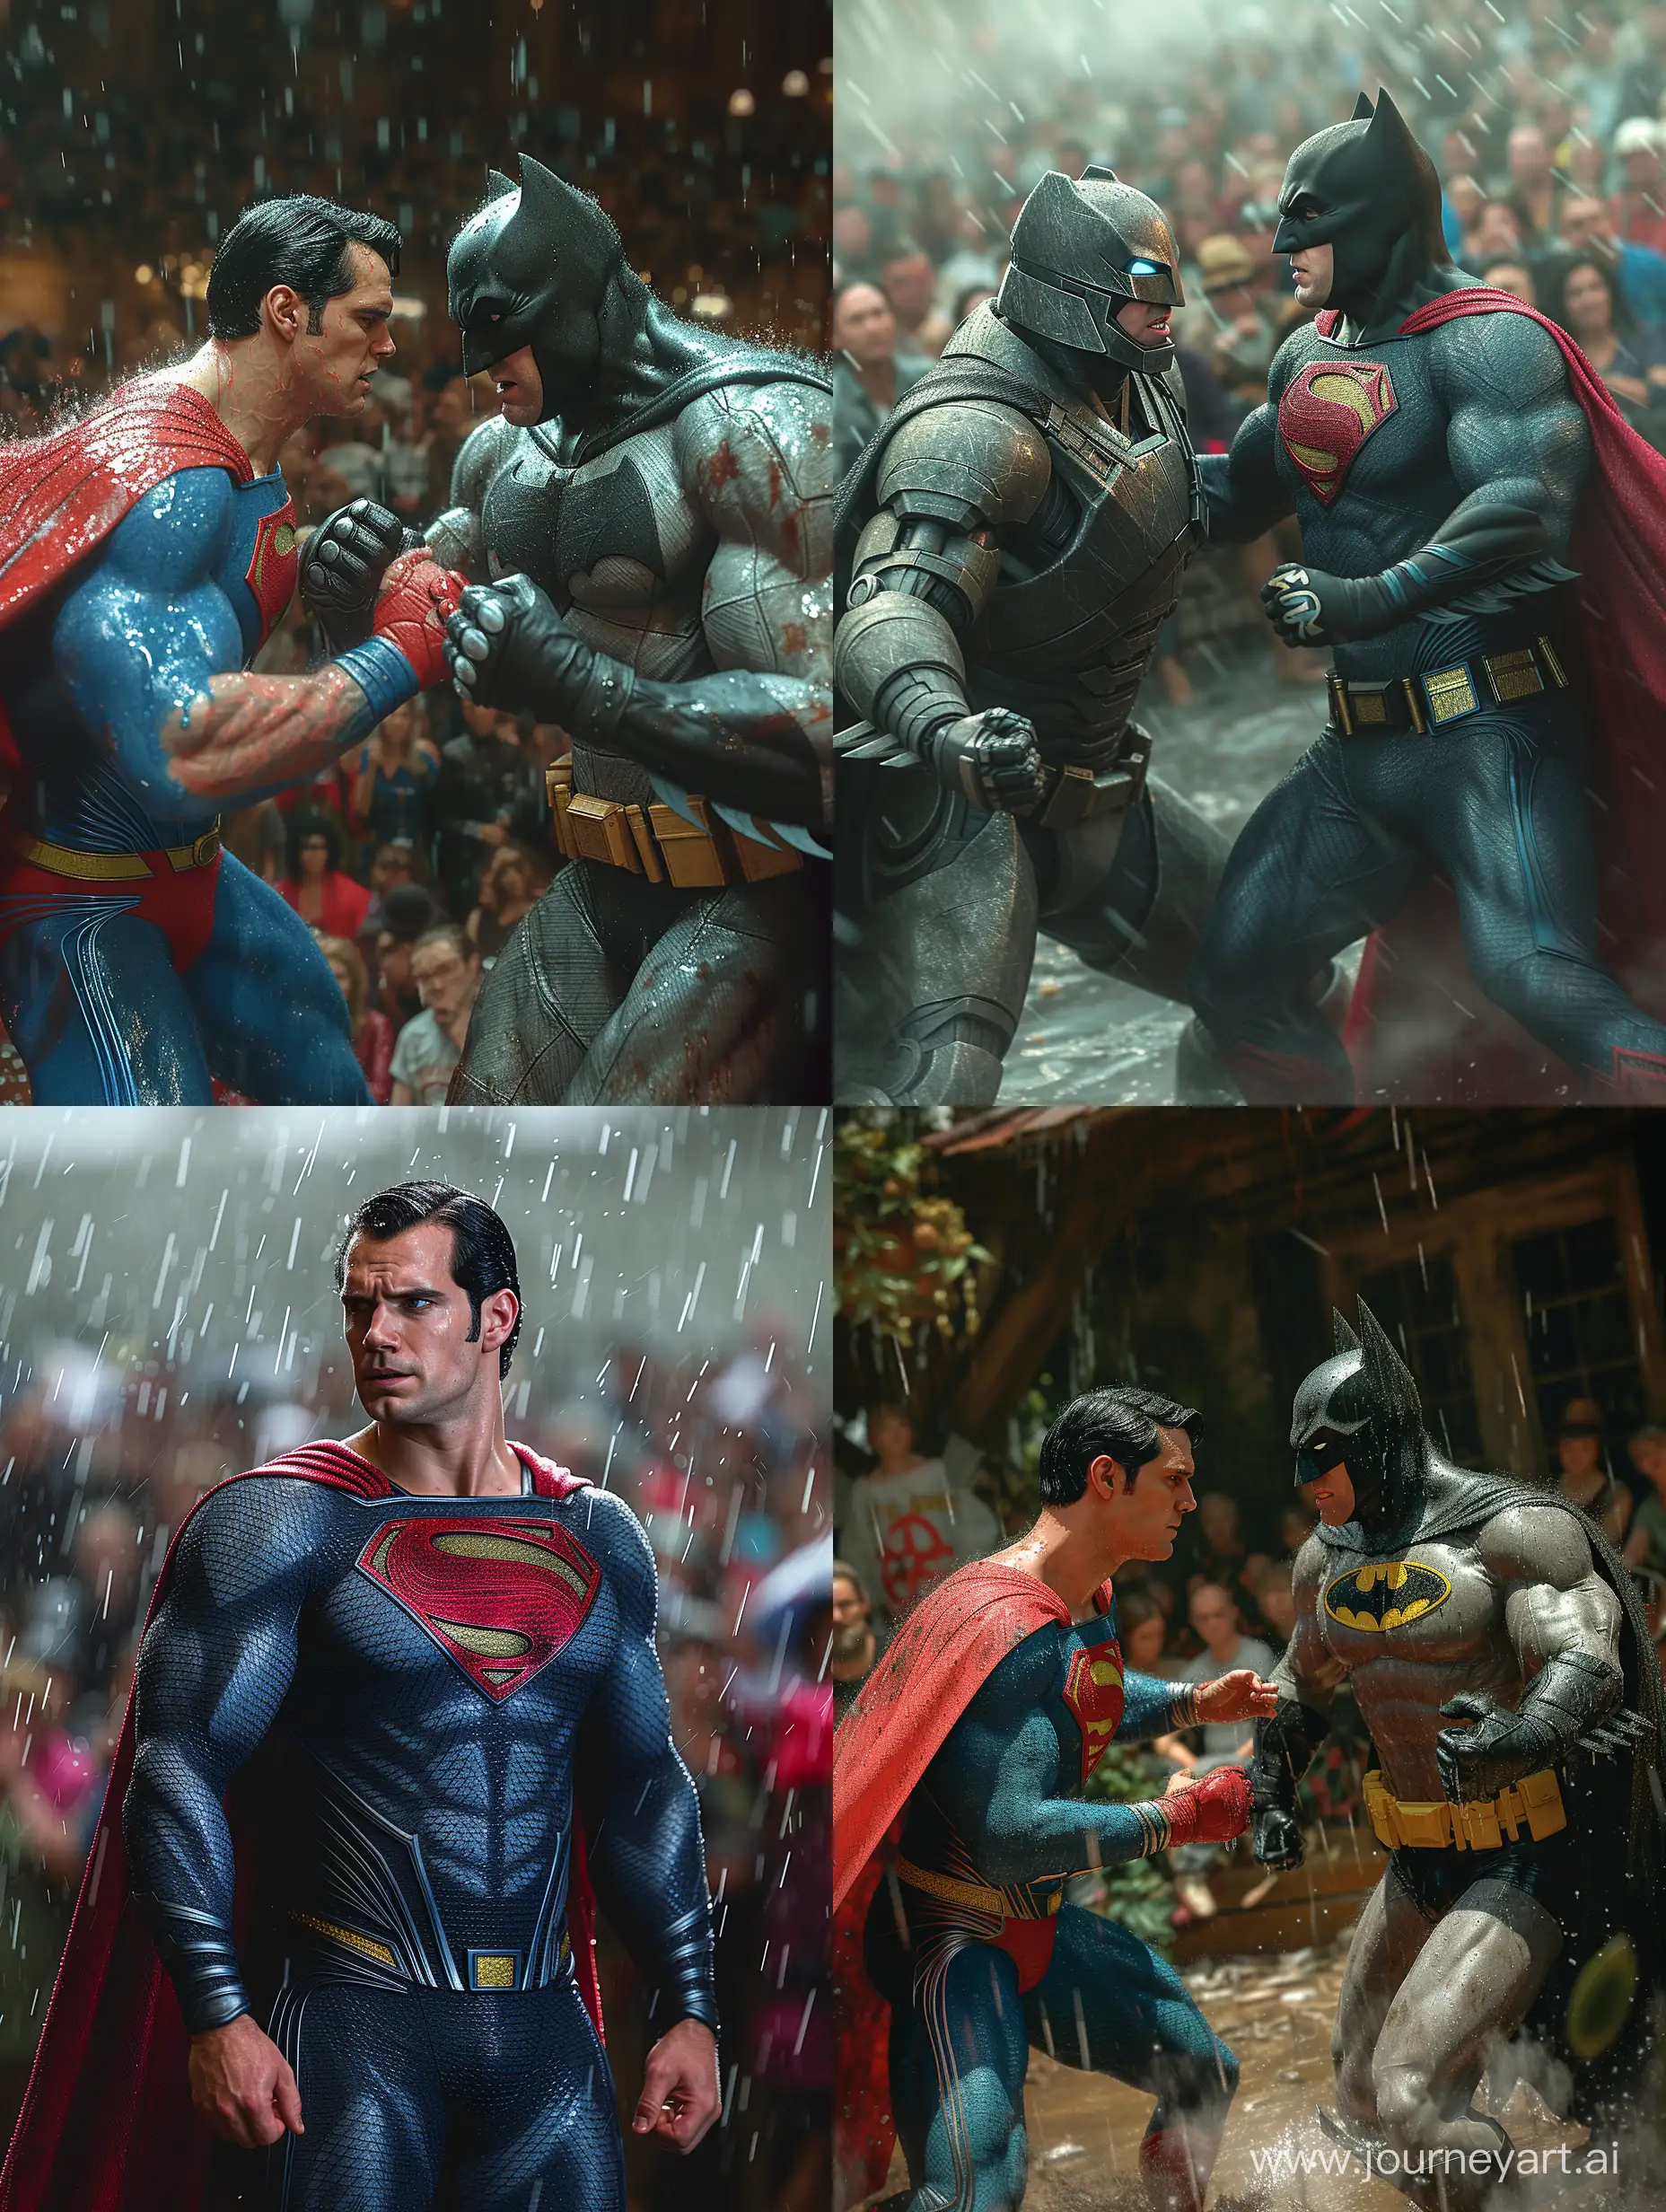 Epic-Showdown-SuperMan-and-Batman-Wrestling-in-Rain